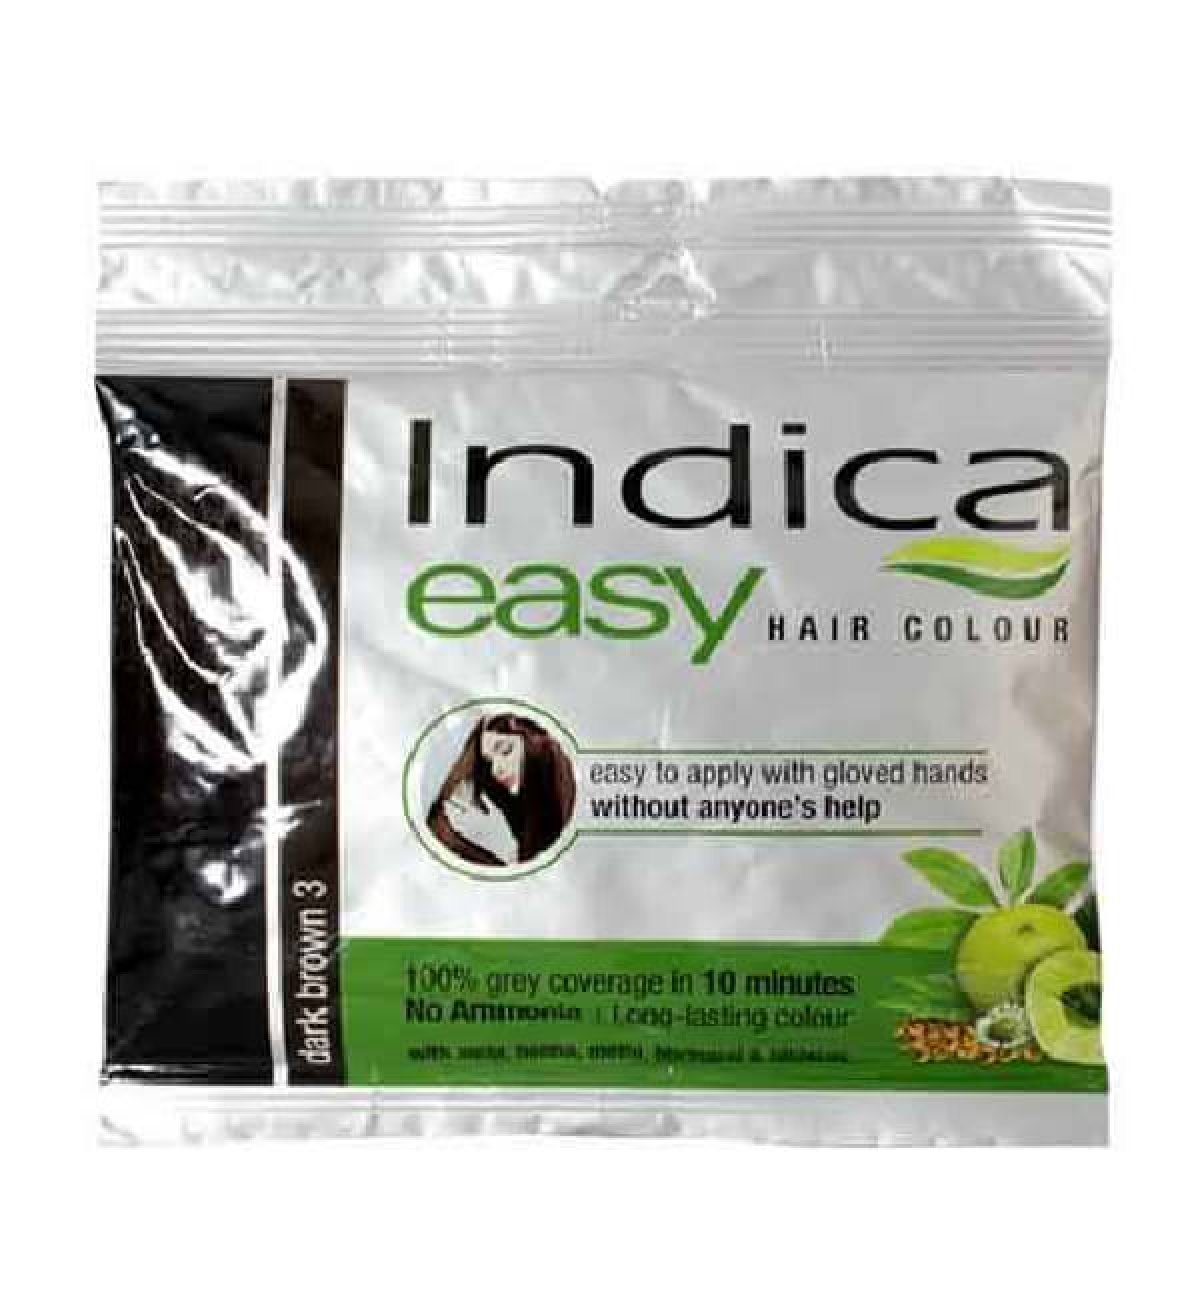 Indica Easy Hair Color Dark Brown - 3 - இண்டிகா ஈஸி ஹேர் கலர் டார்க்  பிரவுன் - 3 (25 ml) - Nagercoil Shopping App 